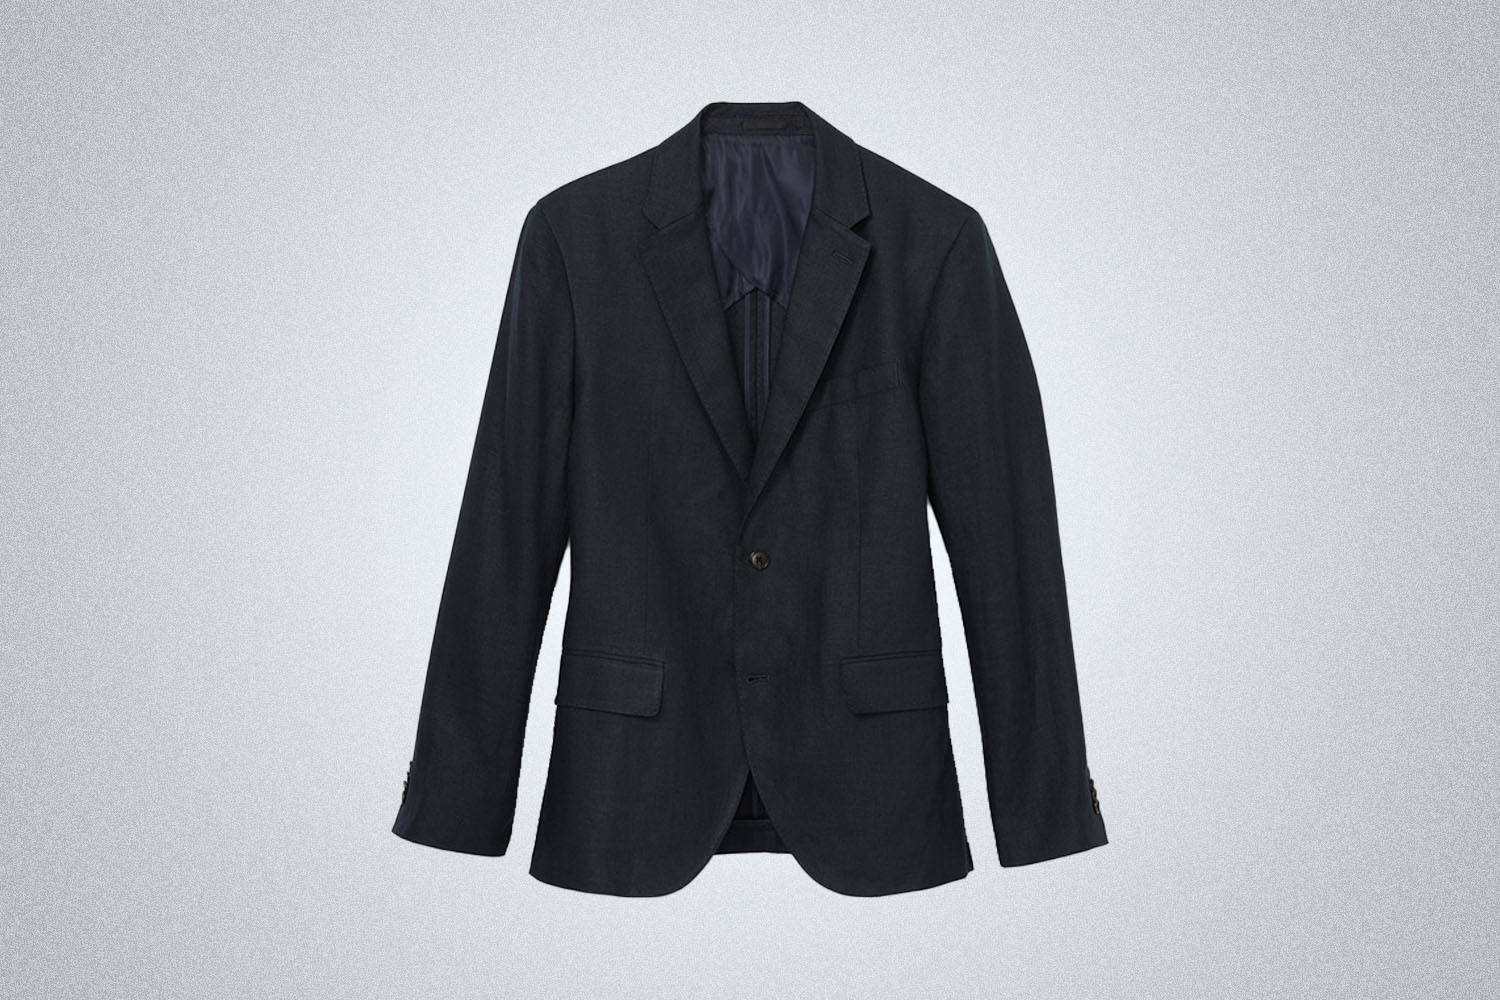 a blue linen blazer from Club Monaco on a grey background